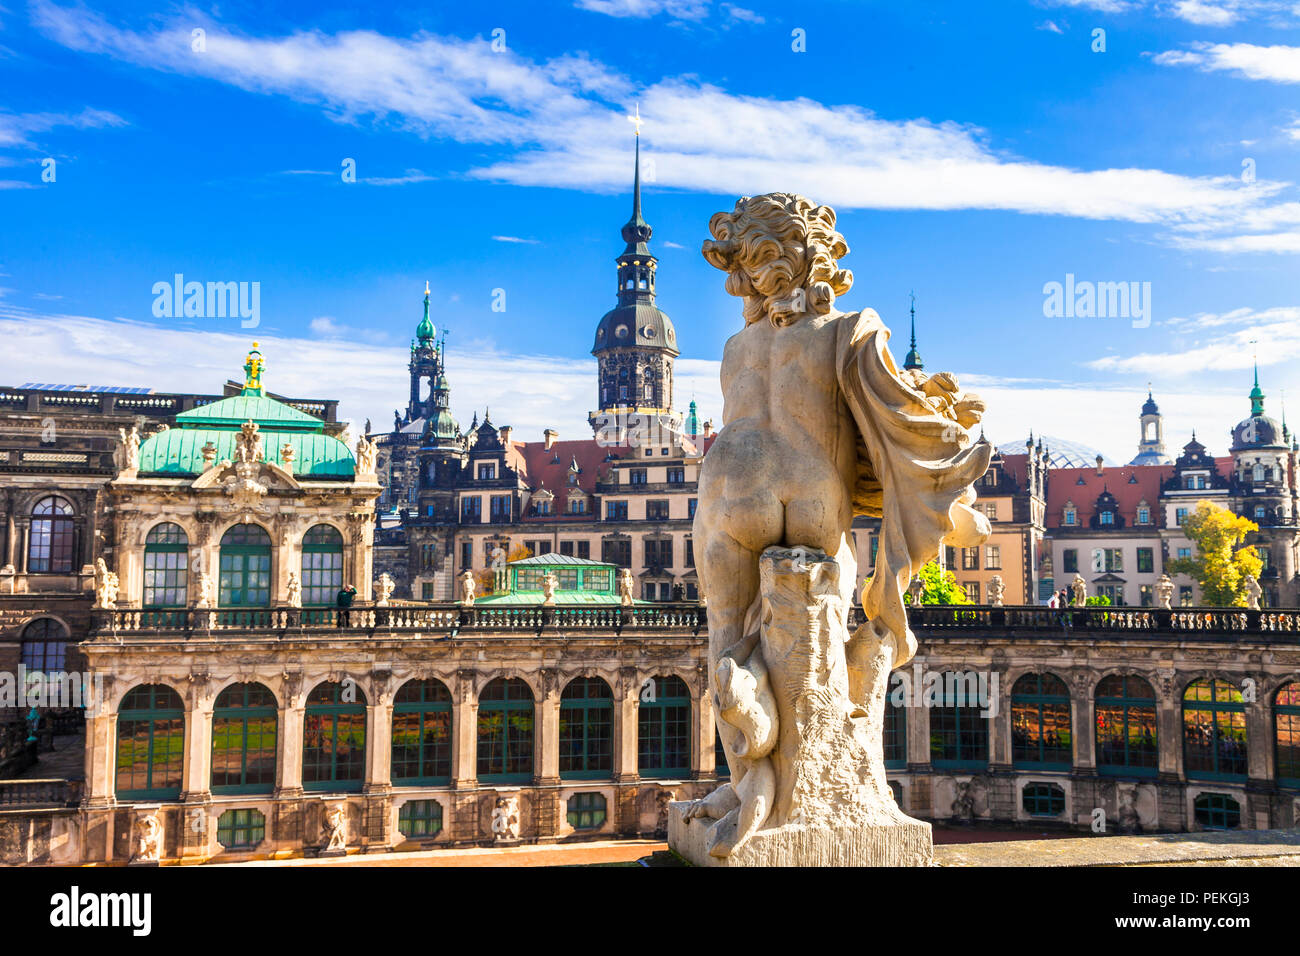 Elegante Zwinger in Dresden, Deutschland. Stockfoto